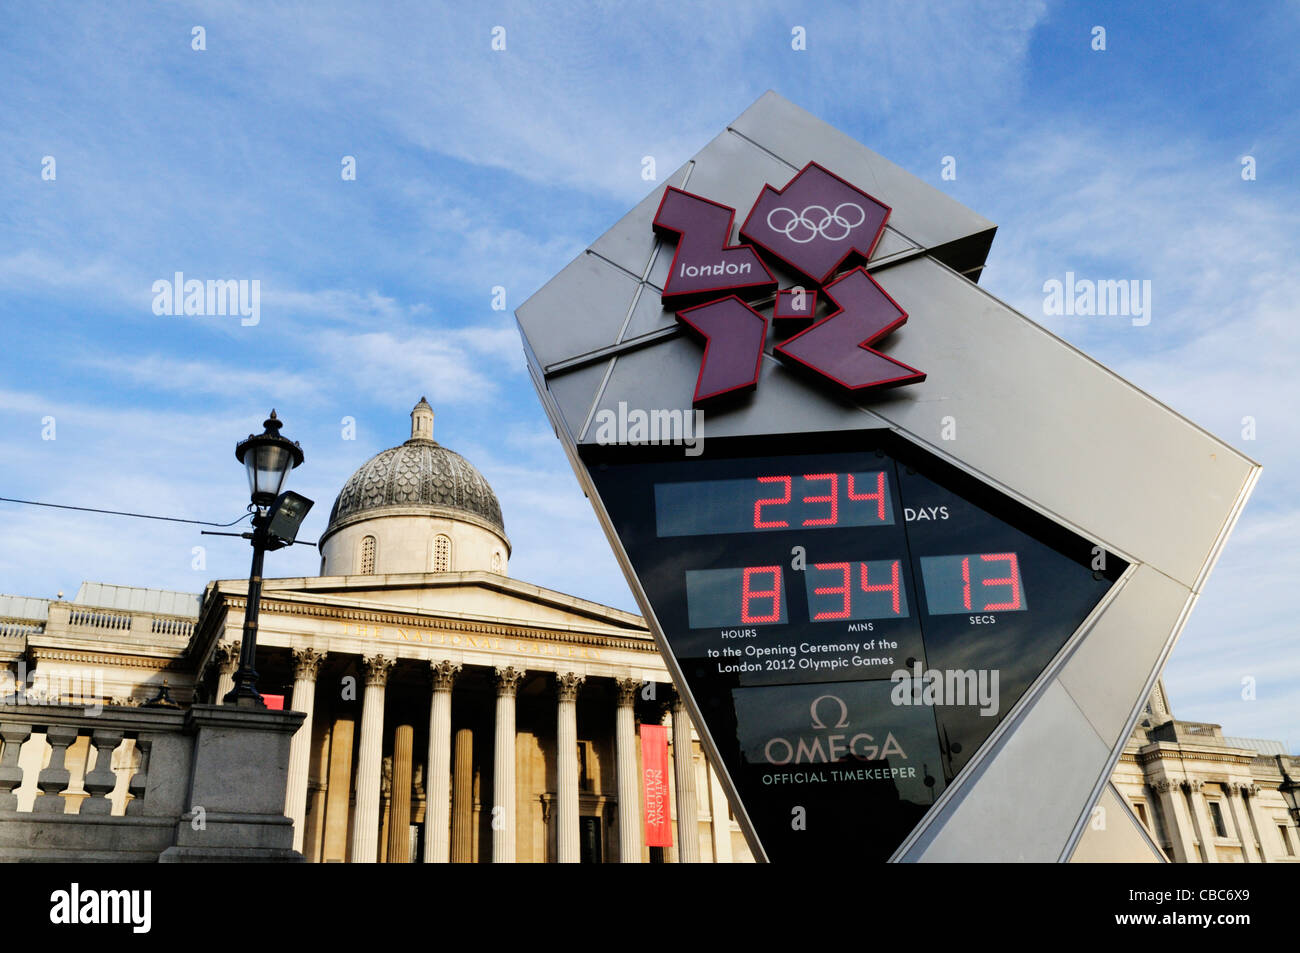 https://c8.alamy.com/comp/CBC6X9/2012-olympics-countdown-trafalgar-square-london-england-uk-CBC6X9.jpg